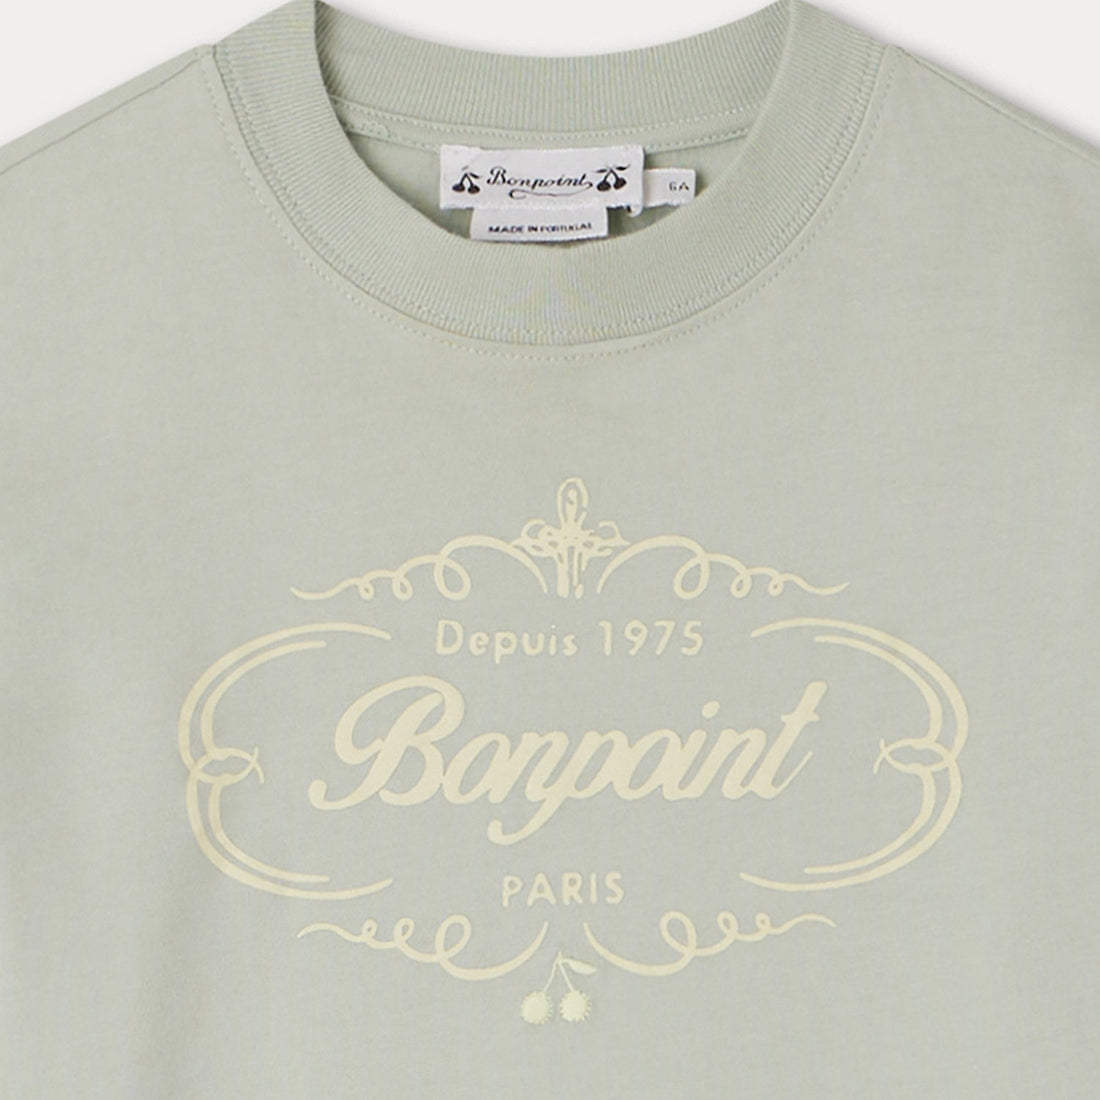 Bonpoint Thibald T-Shirt - Lagon